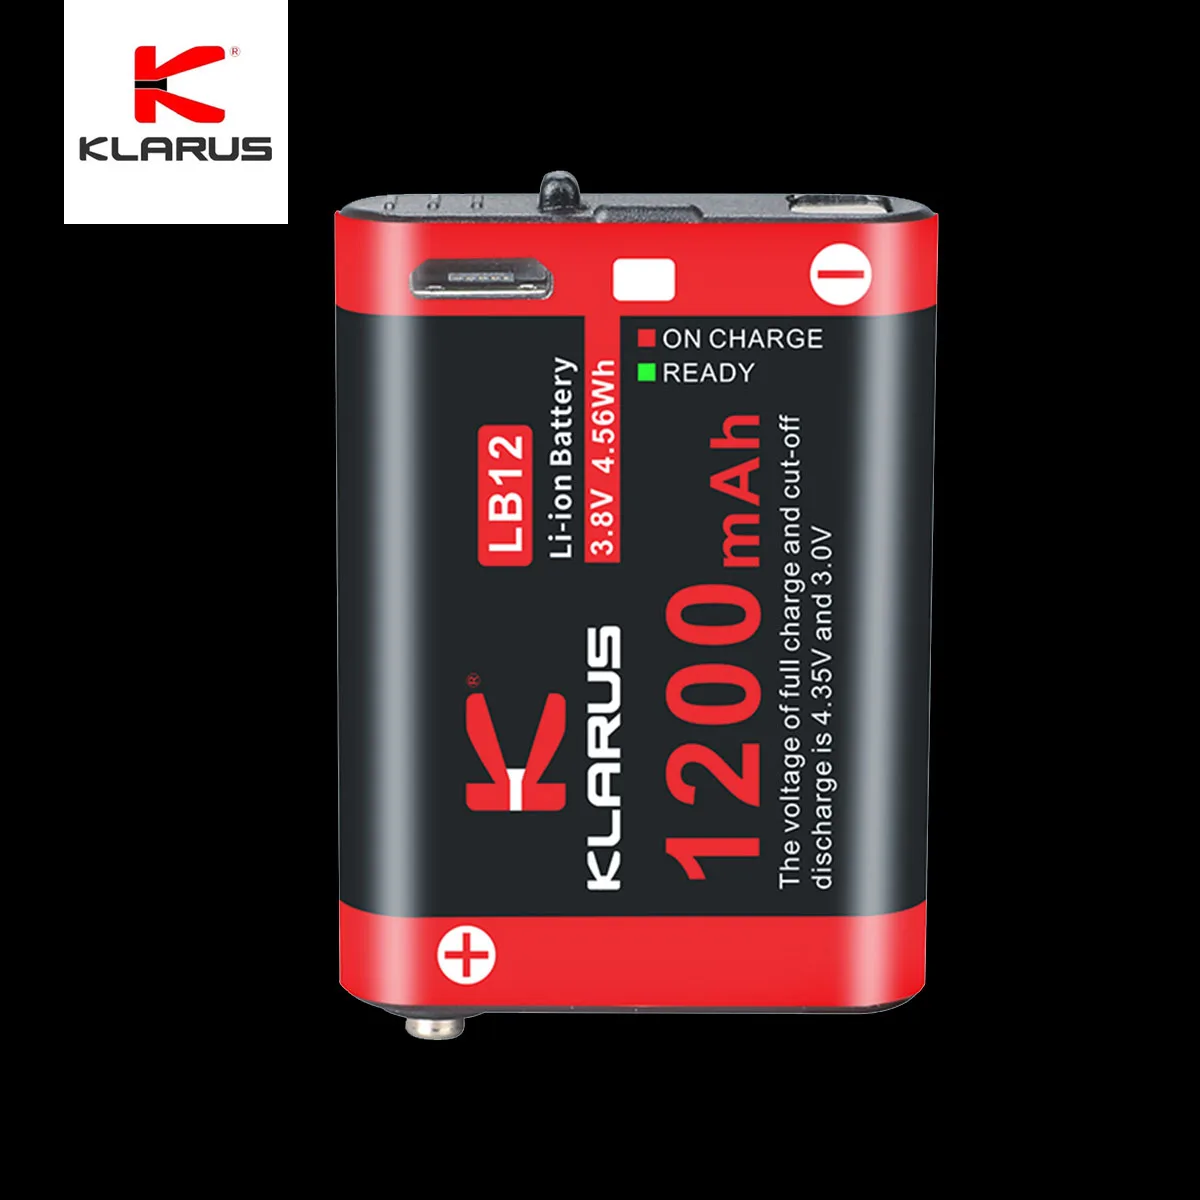 Klarus Original Headlamp Battery LB12, High Capacity 1200mAh, 50km Crosscountry Race Extended Battery for HR1 Pro Headlamp